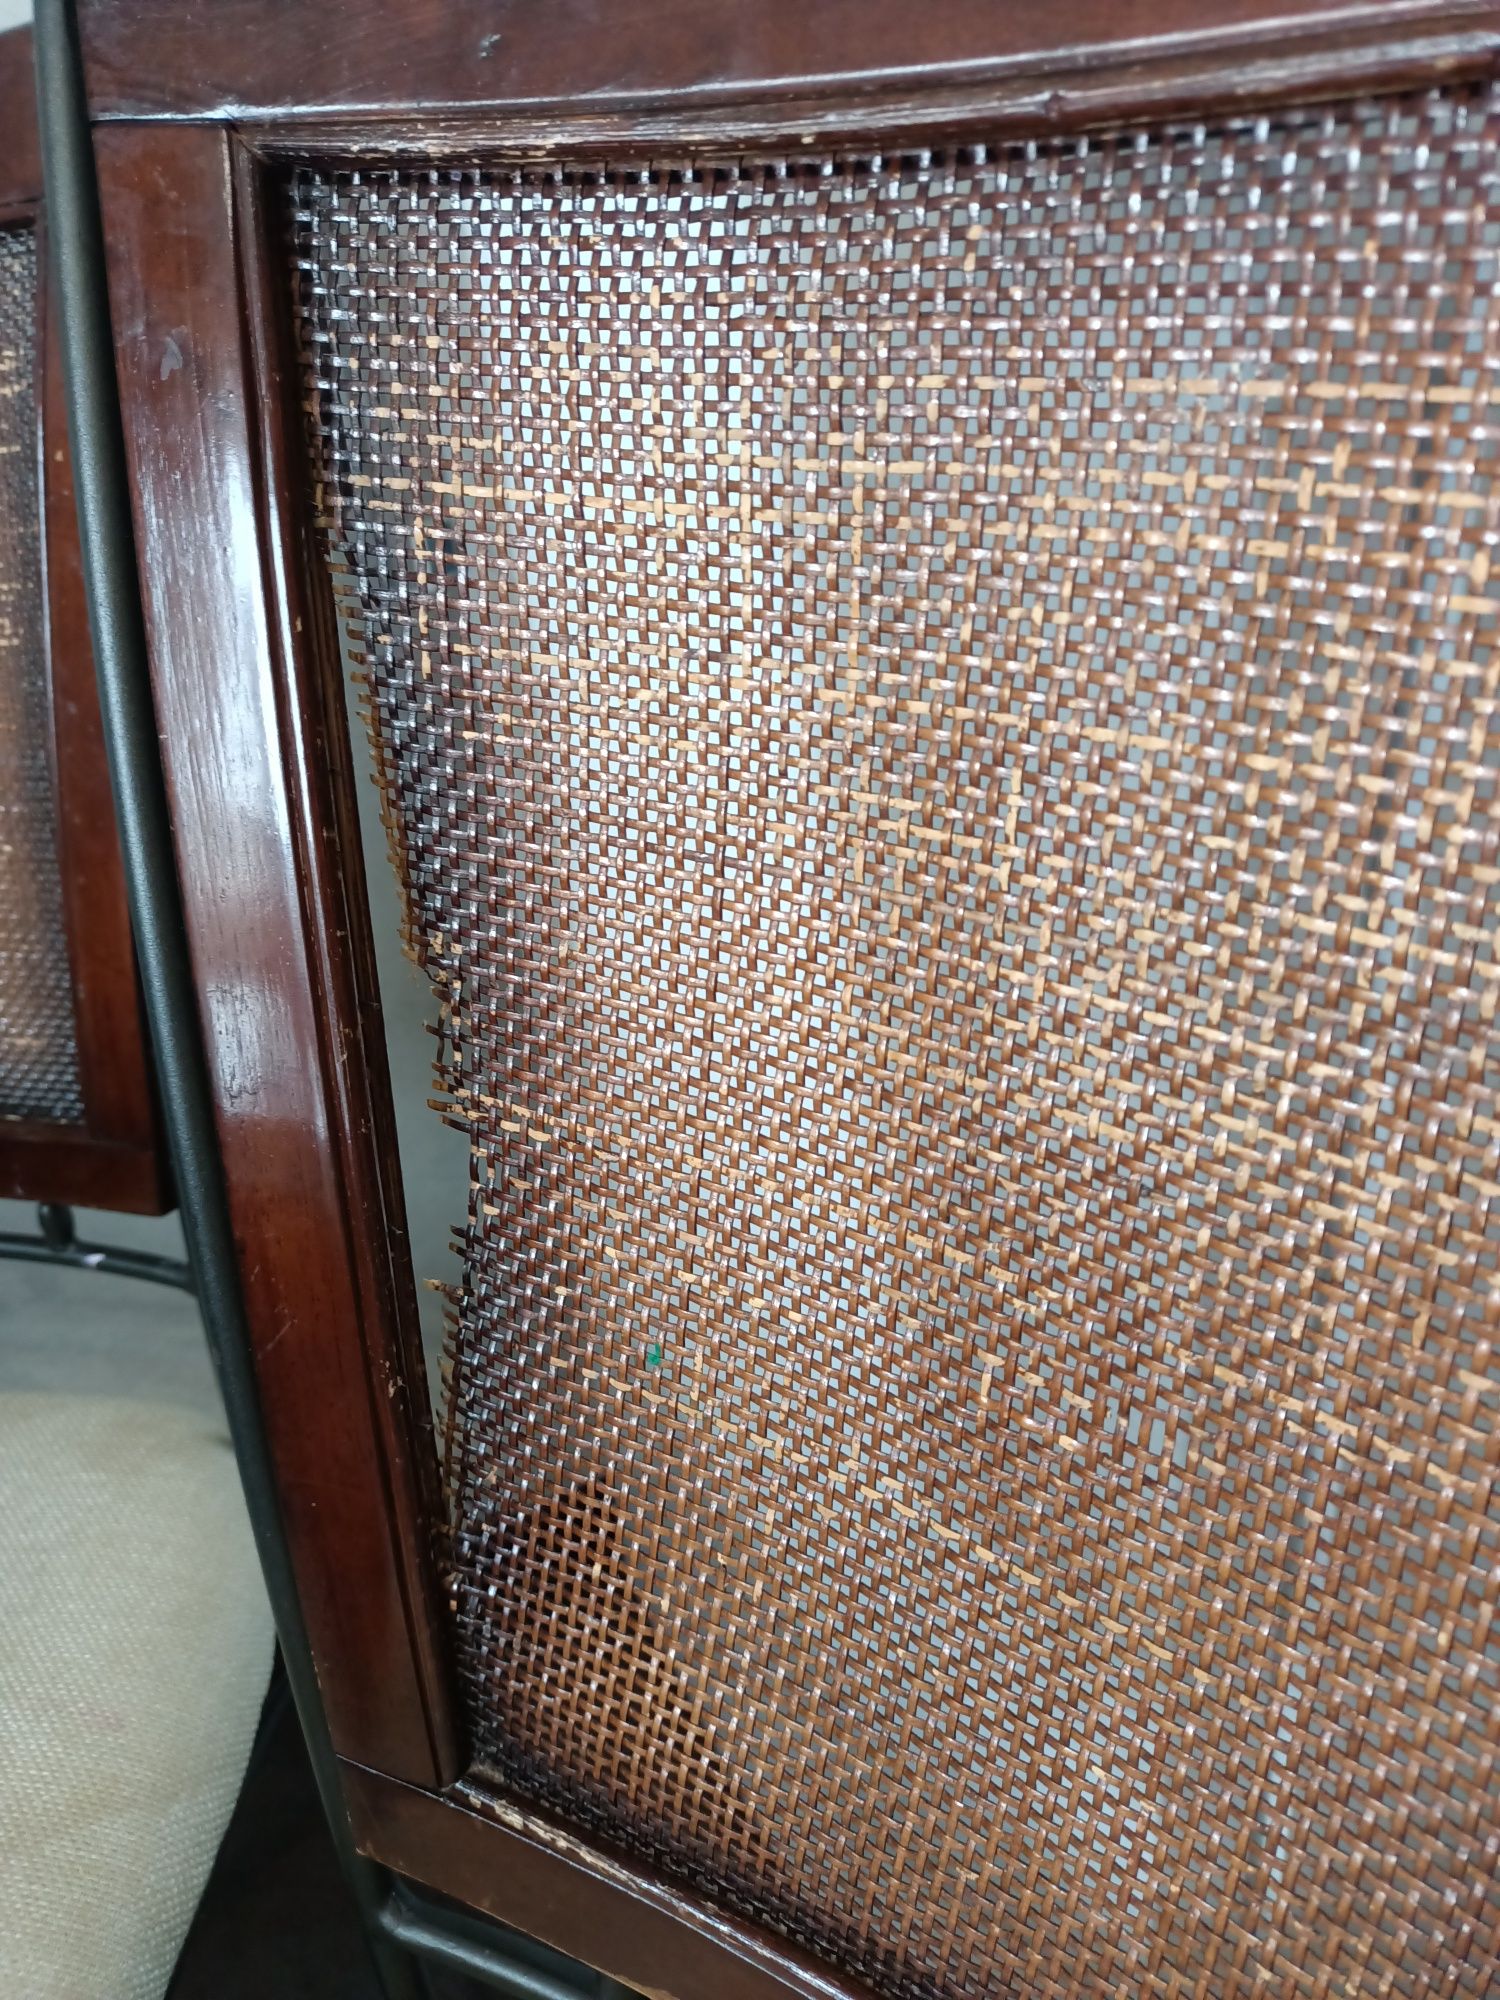 Кованый стол со стульями производство Винотти Париджи